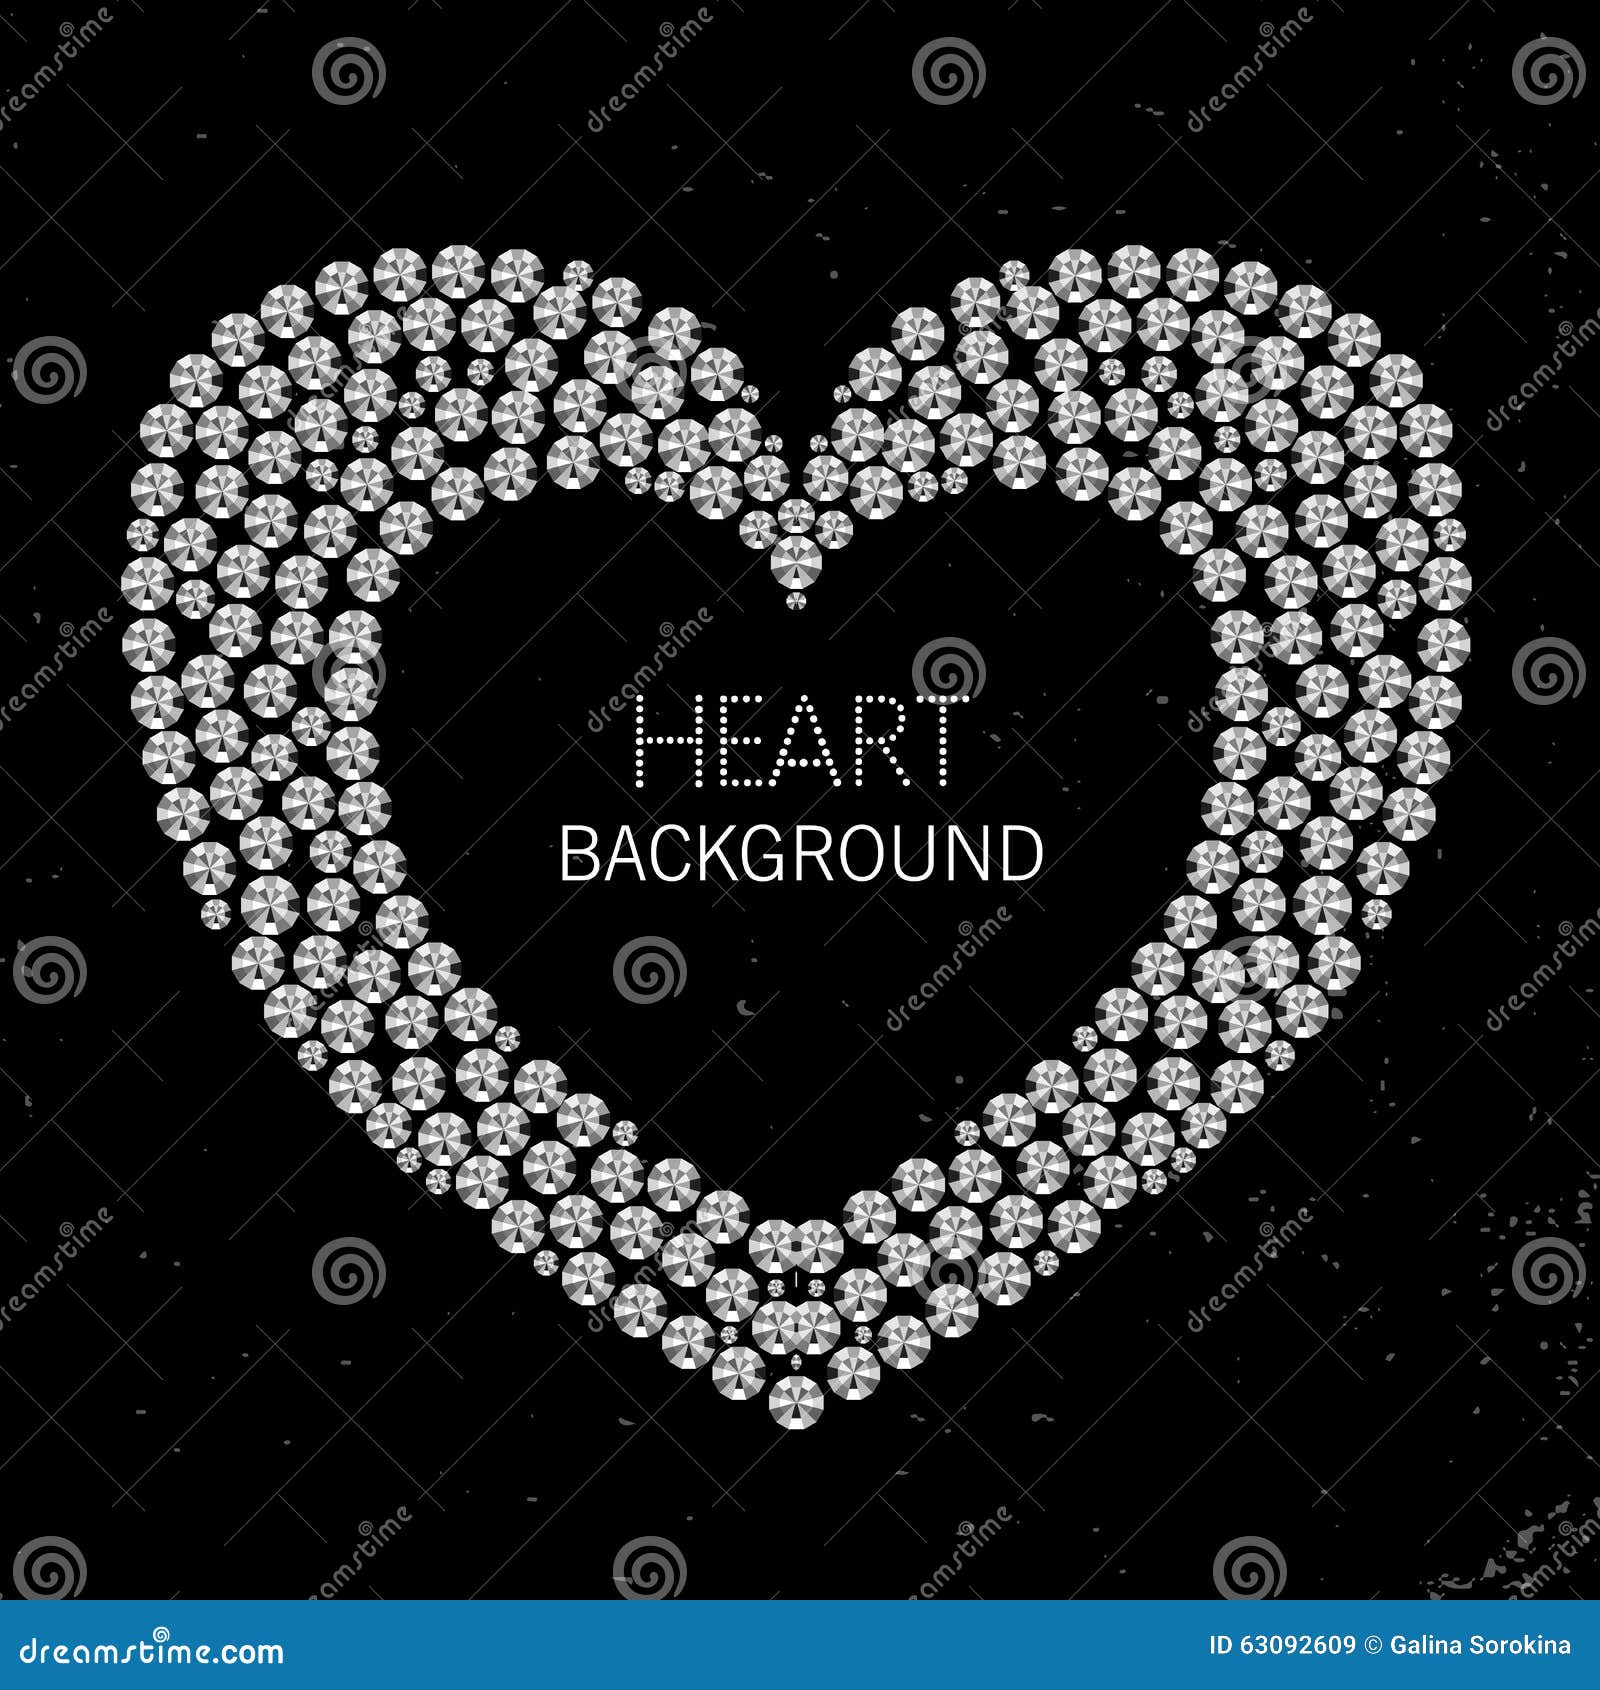 heart frame made of diamonds or rhinestones